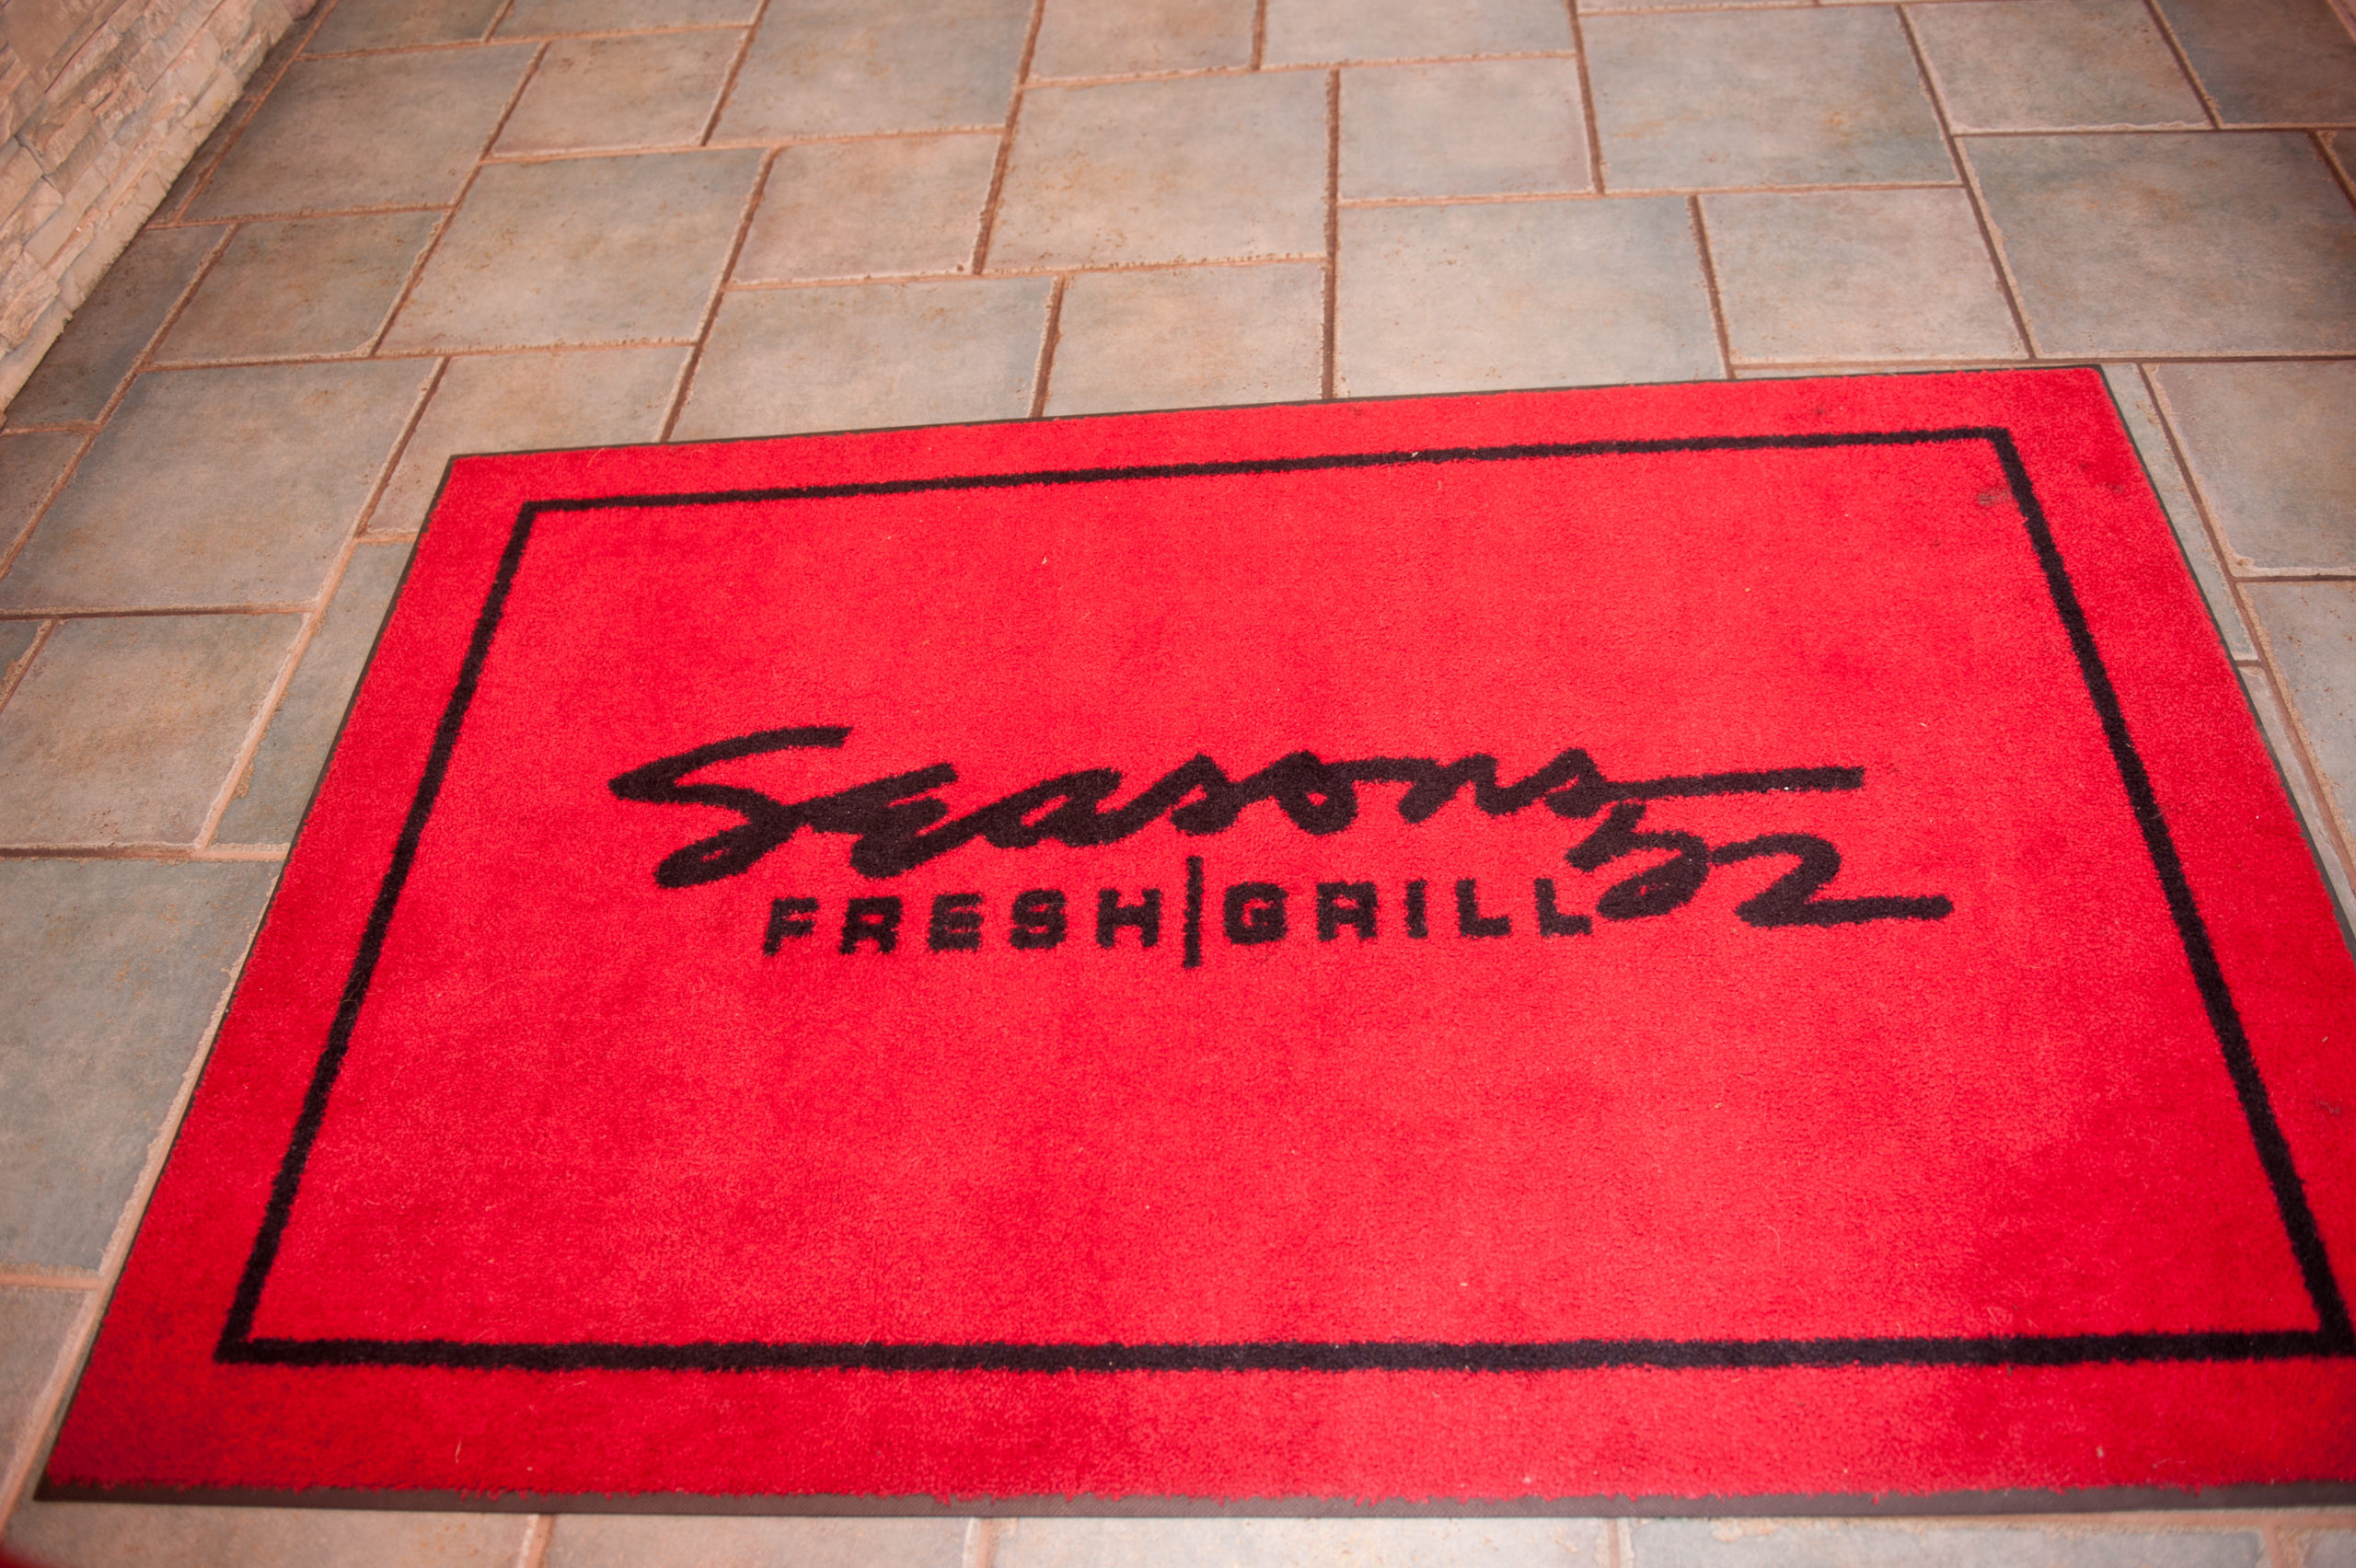 seasons 52 restaurant